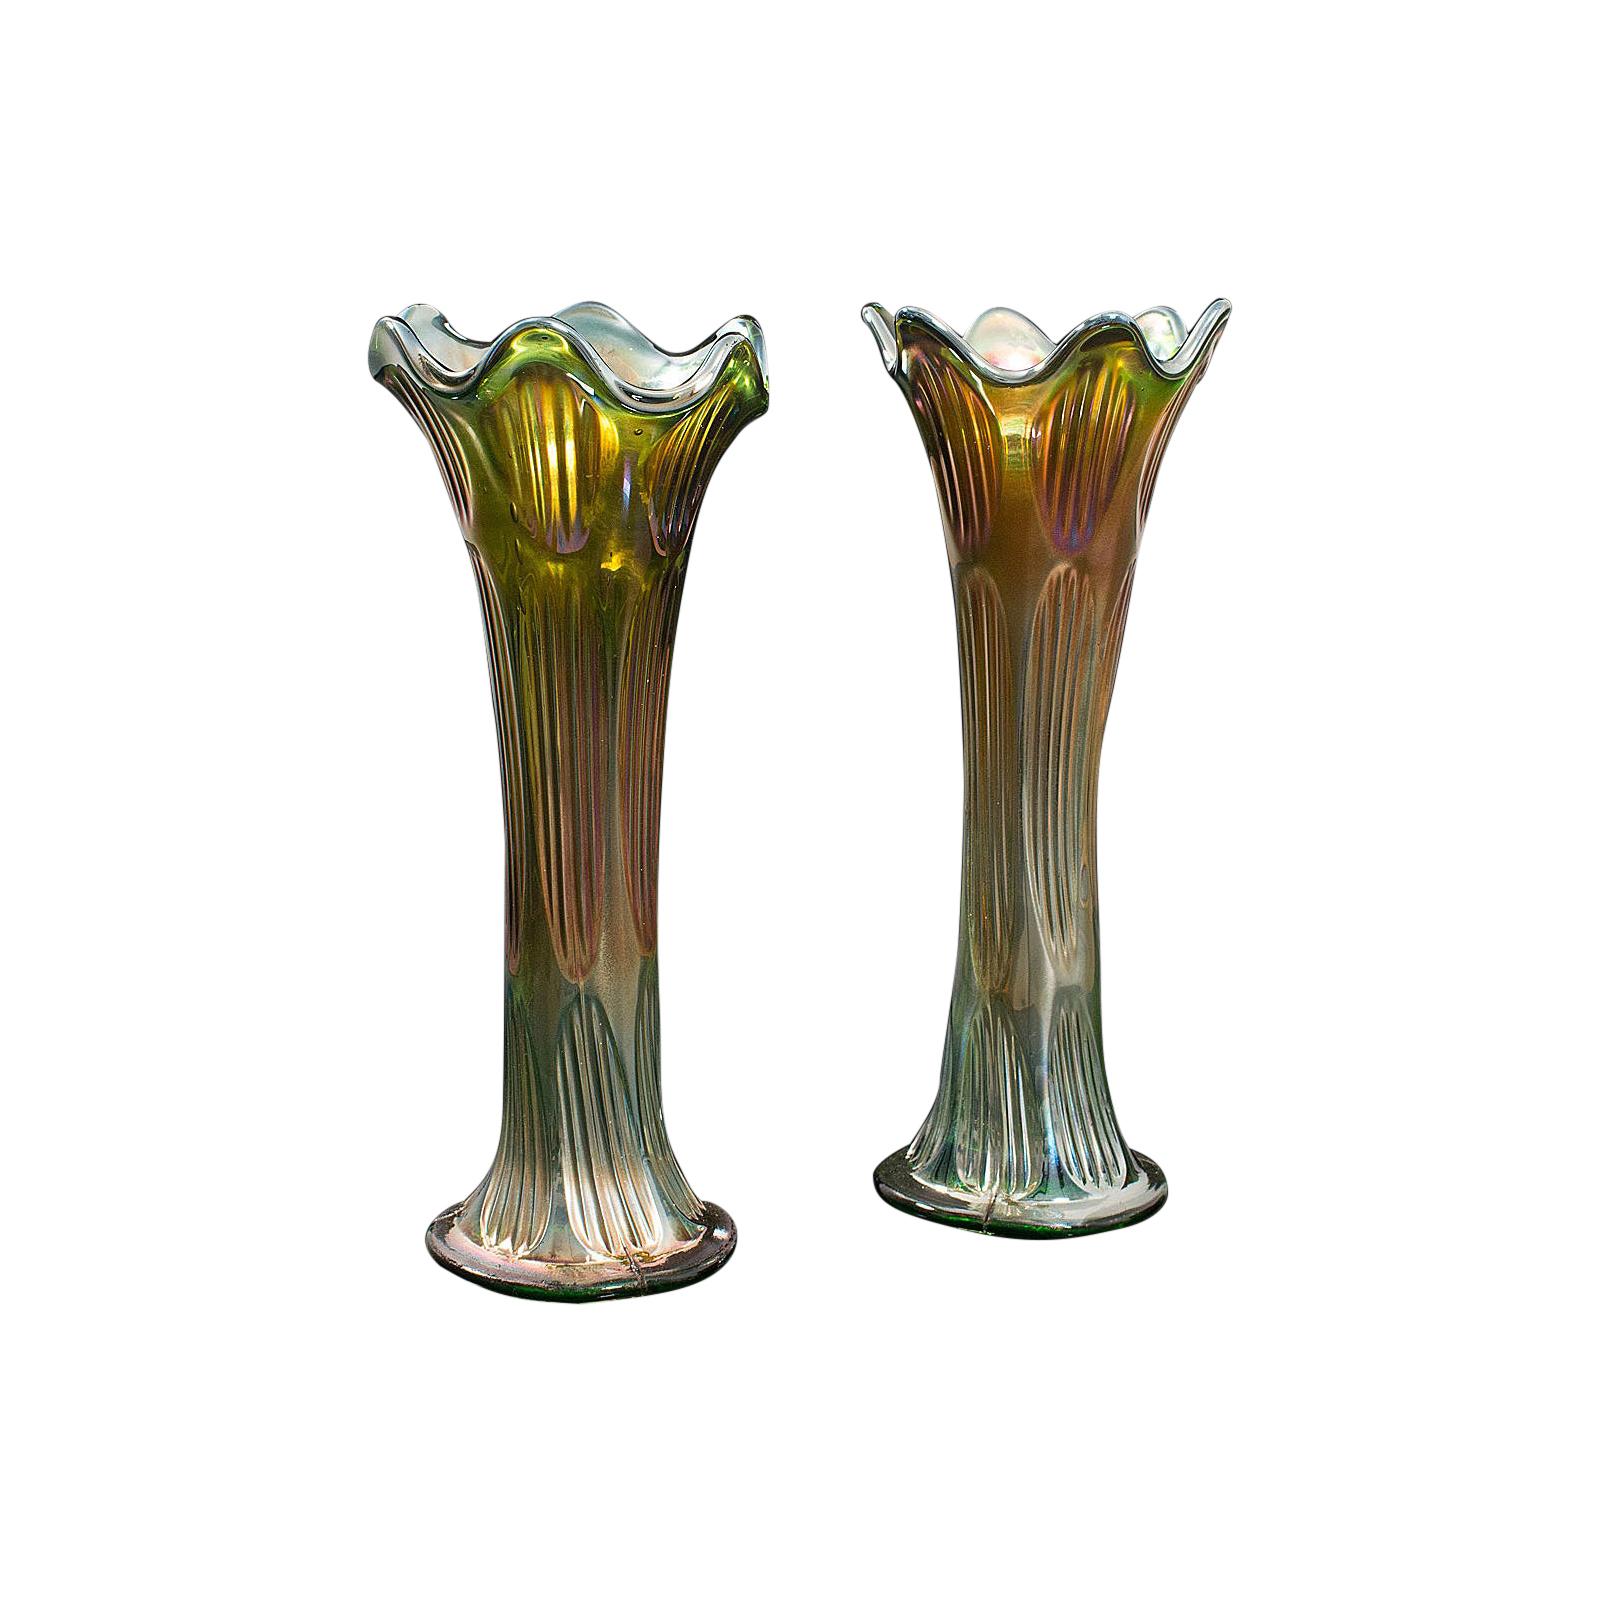 Pair of Vintage Decorative Flower Vases, English, Carnival Glass, circa 1930